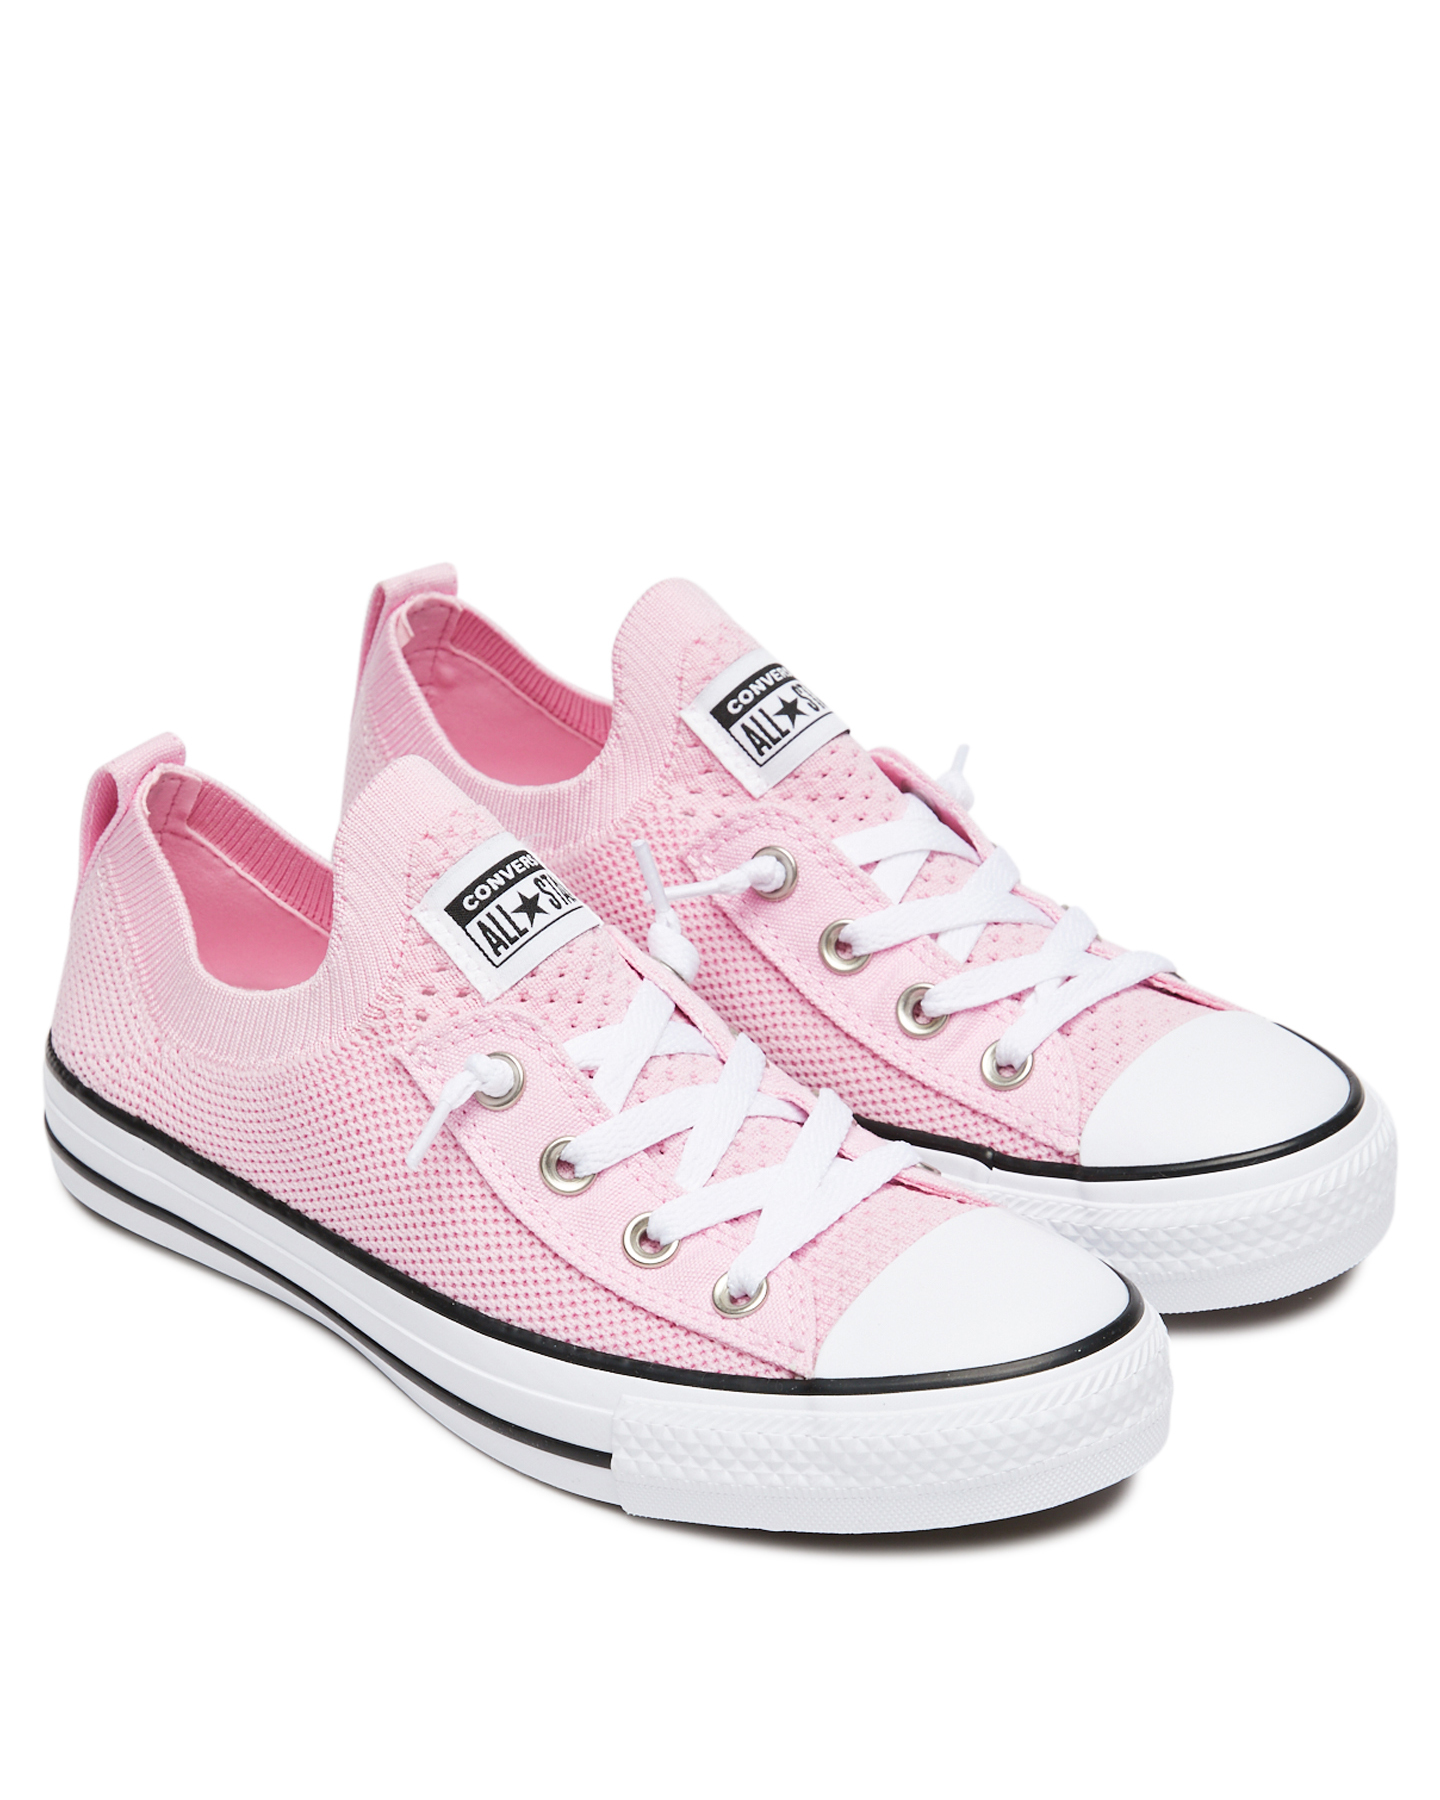 Converse Womens All Star Shoreline Knit Shoe - Pink Glaze ...